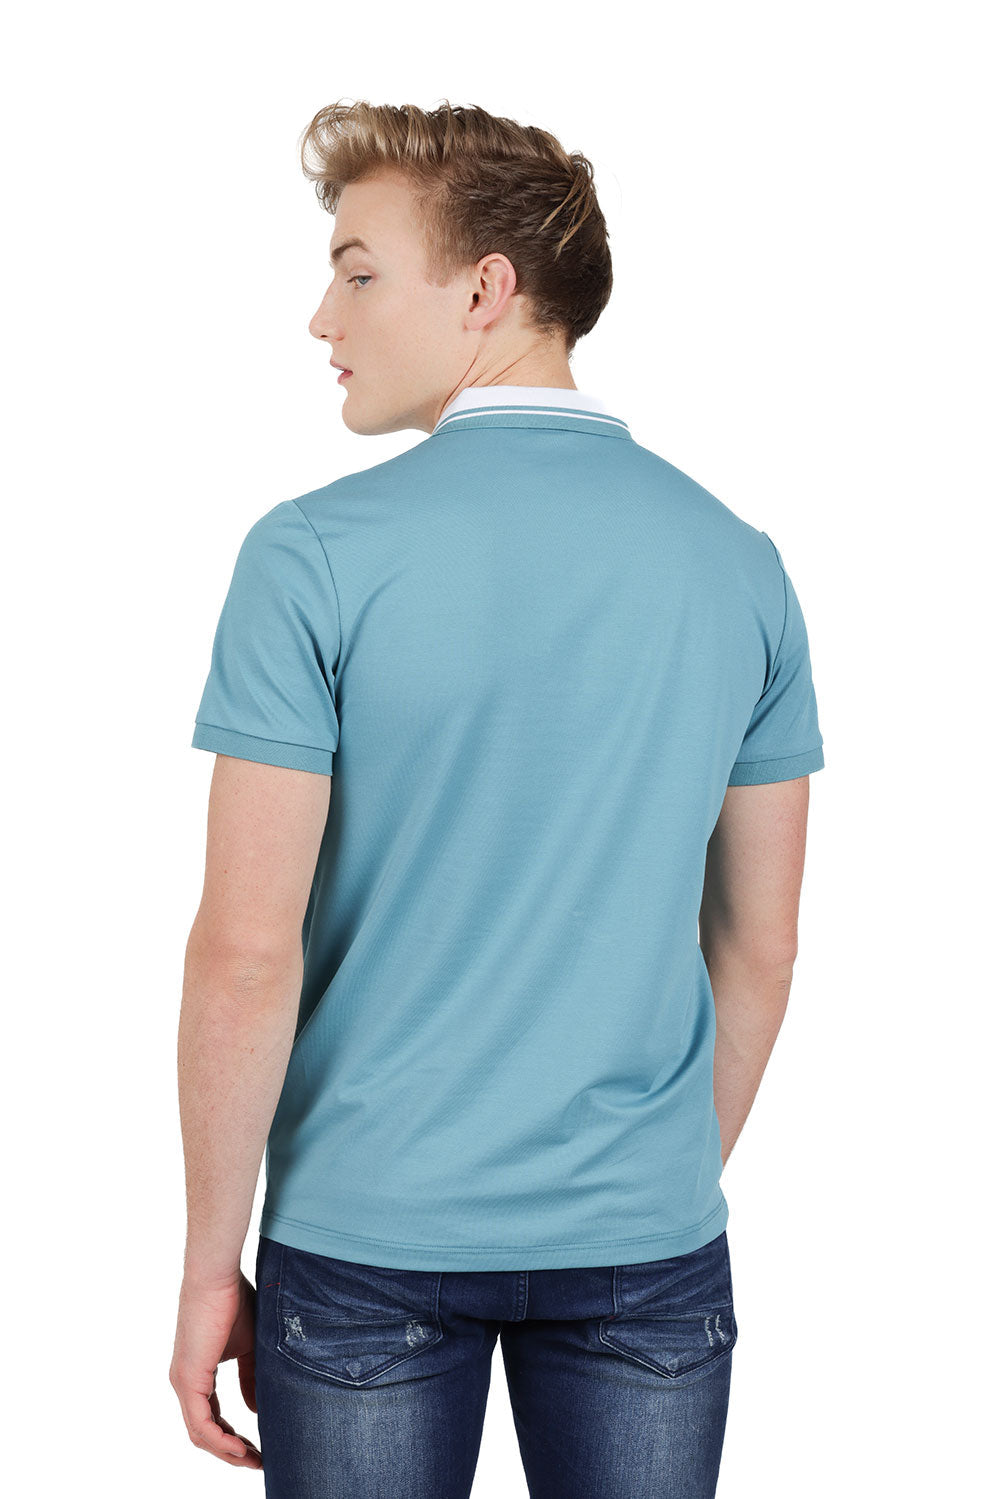 Barabas Men's Solid Color Luxury Short Sleeves Polo Shirts PP824 Aqua